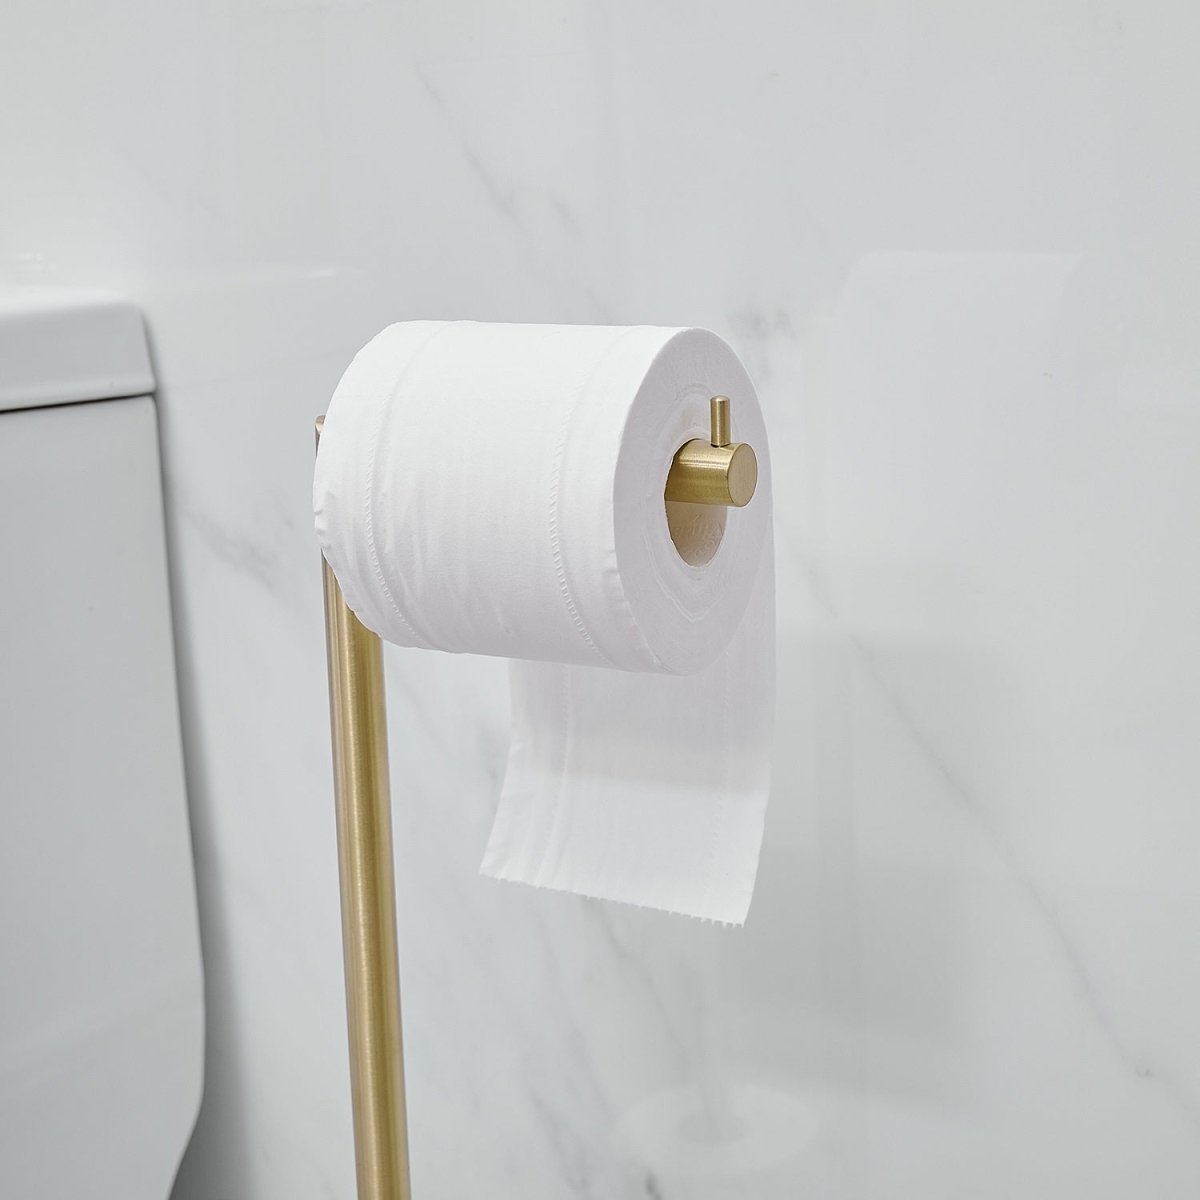 Bathroom Freestanding Toilet Paper Holder in Brushed Gold - buyfaucet.com